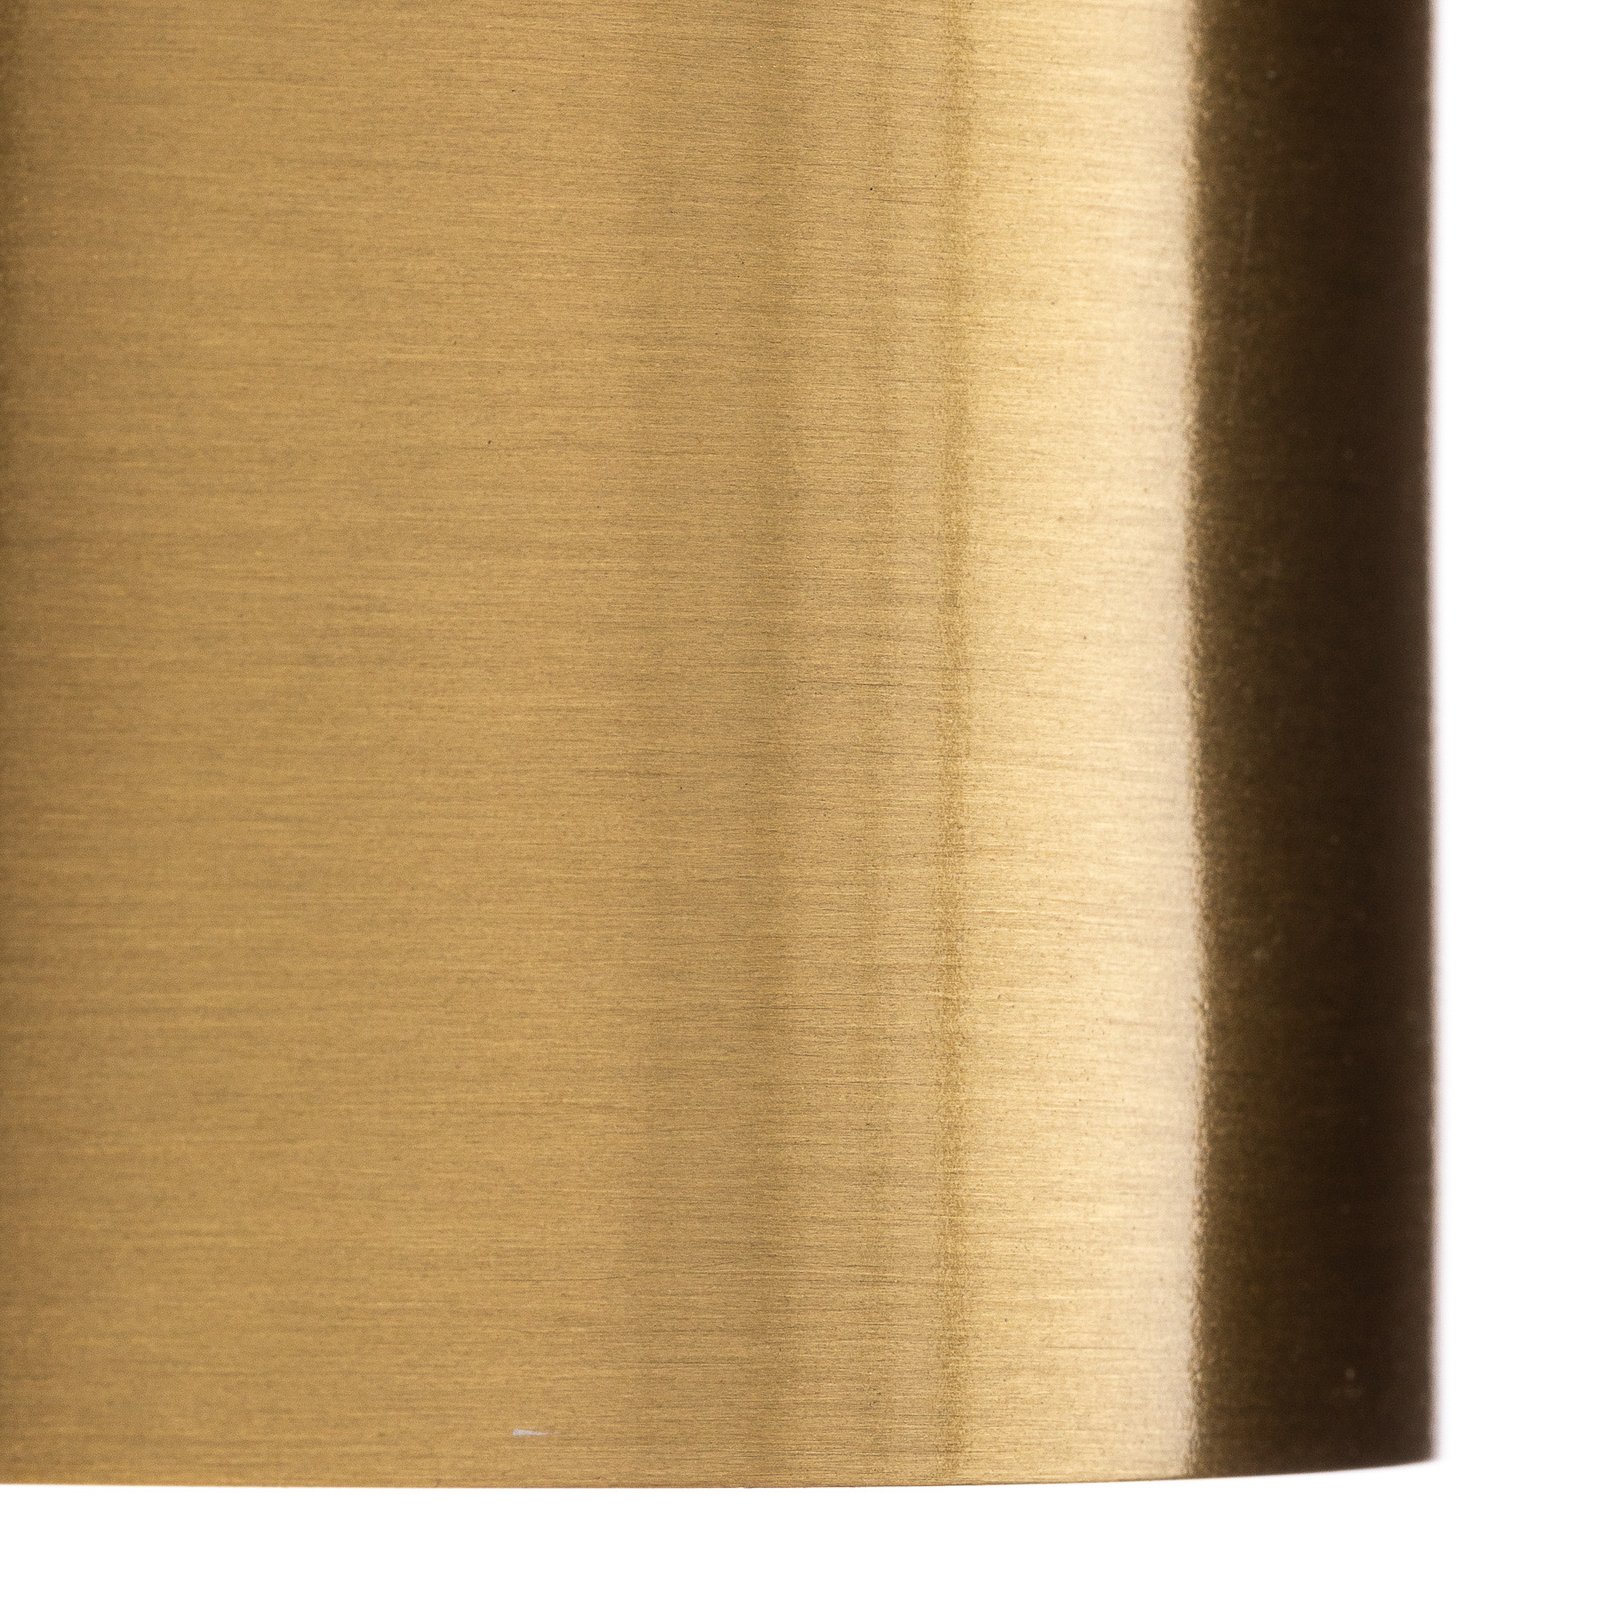 Lindby Nivoria LED-es reflektor, 11 x 6,5 cm, arany, 4 darabos szett